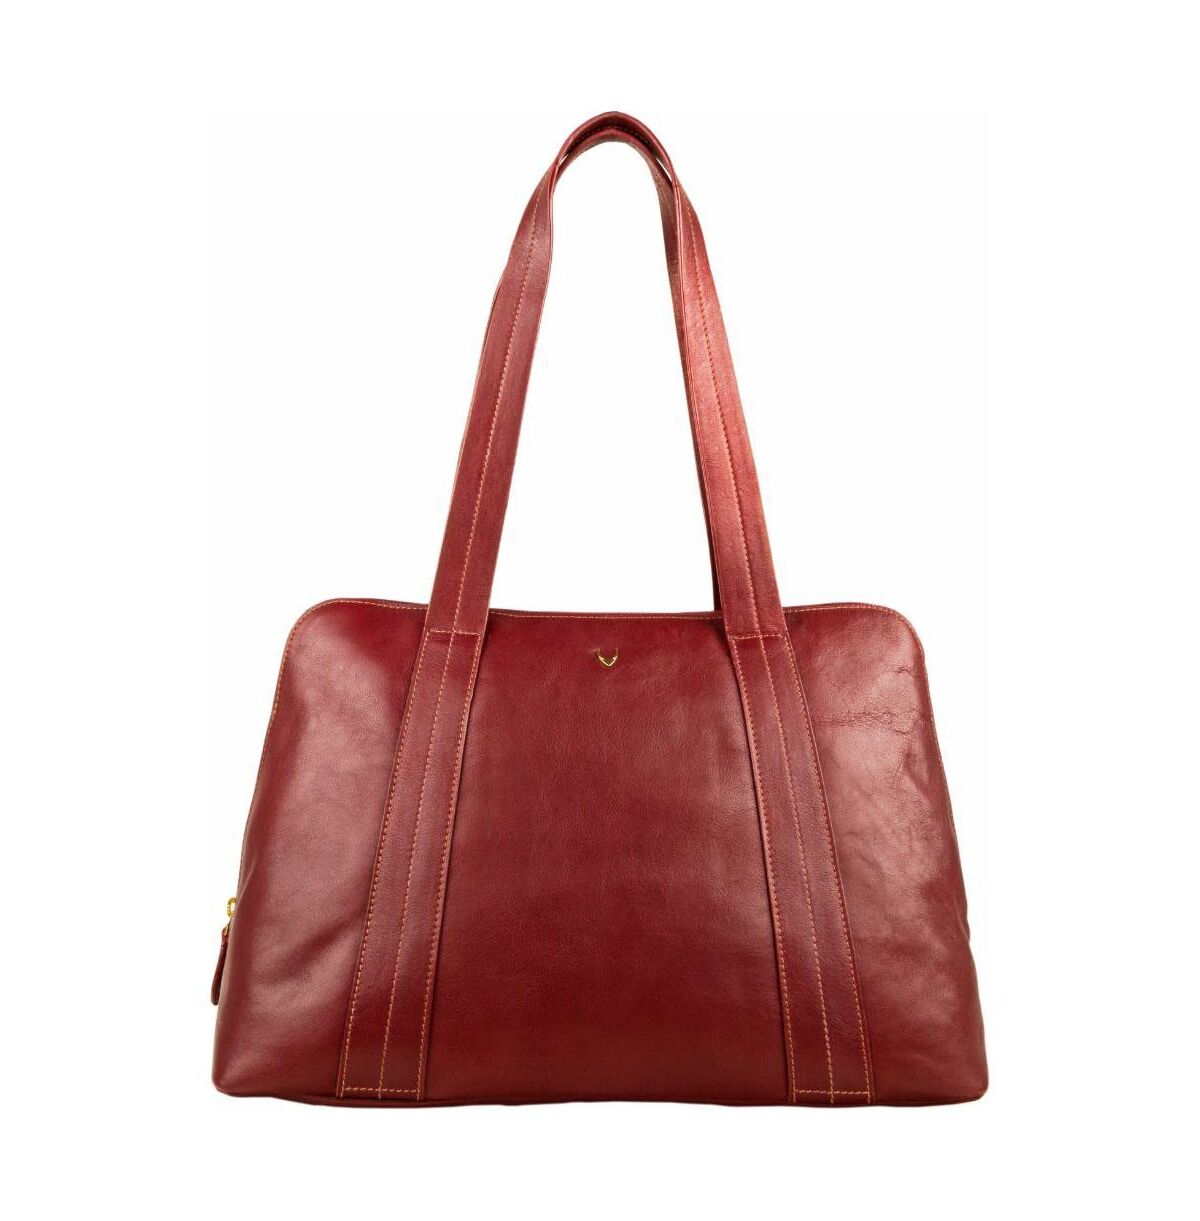 Hidesign Hide sign Cerys Large Leather Multi-Compartment Women's Tote Bag, Stylish Shoulder Handbag & Women's Work Bag - size (15.16